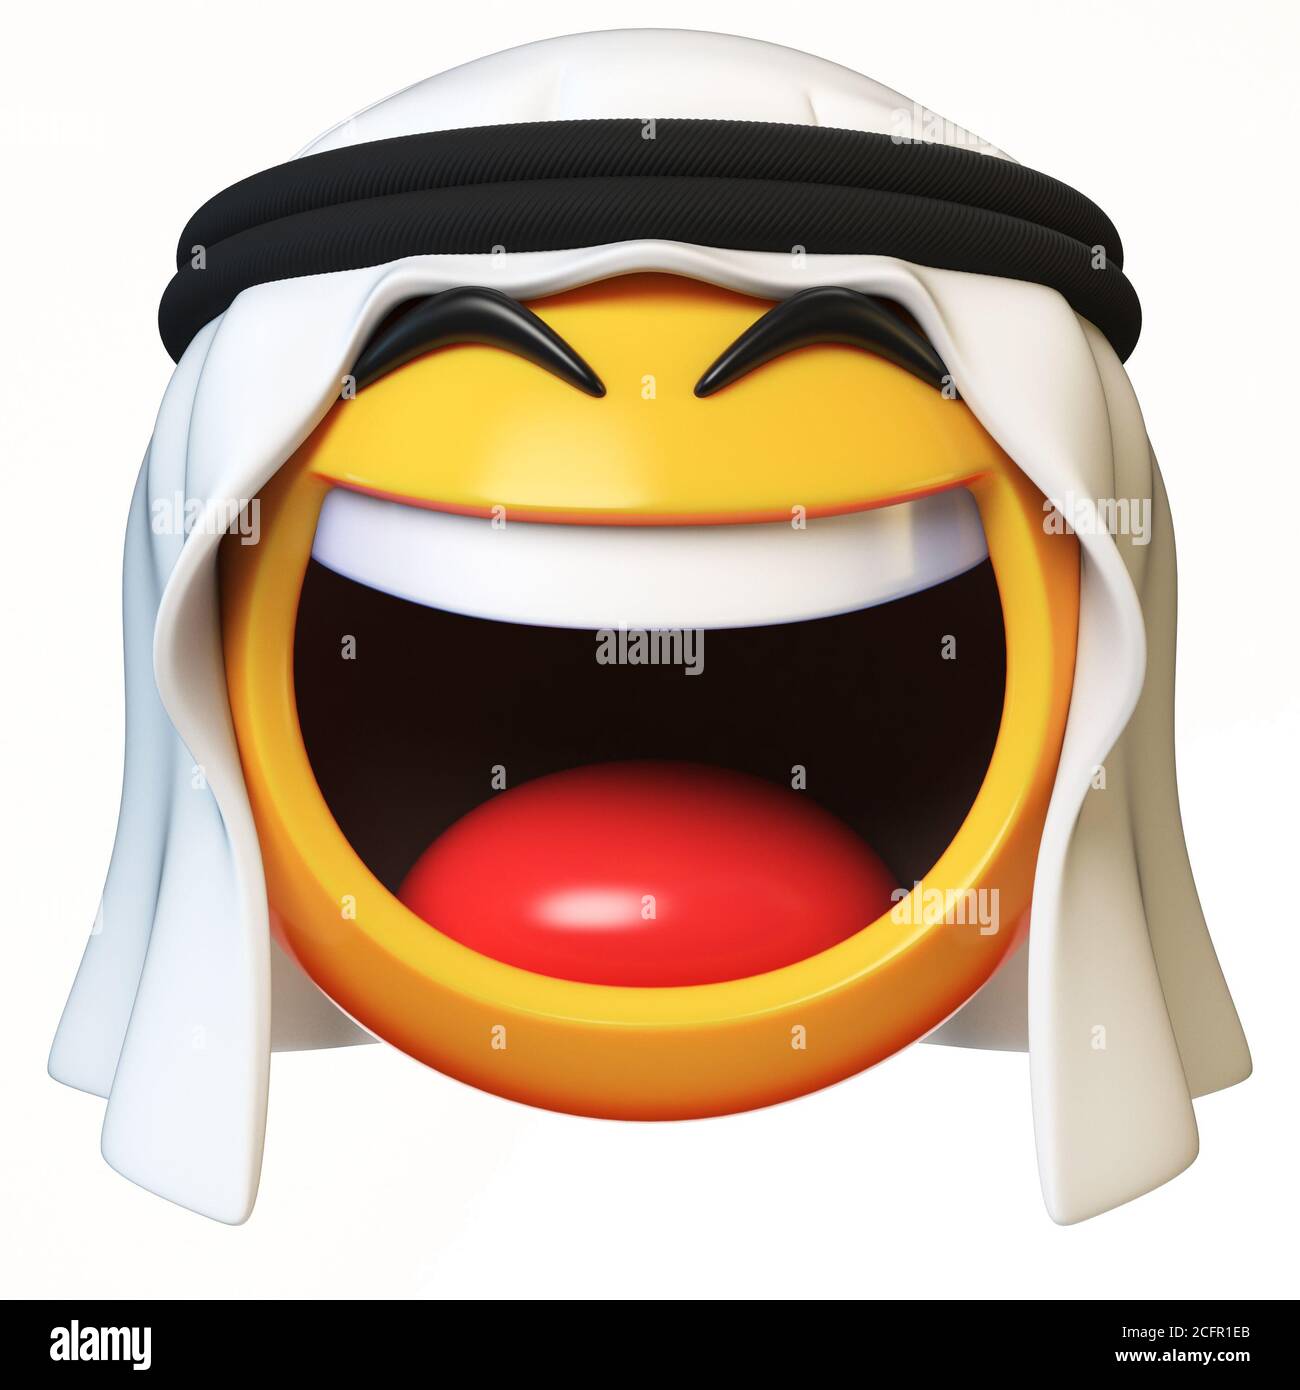 Arab emoji isolato su sfondo bianco, lol Arabian face emoticon rendering 3d Foto Stock